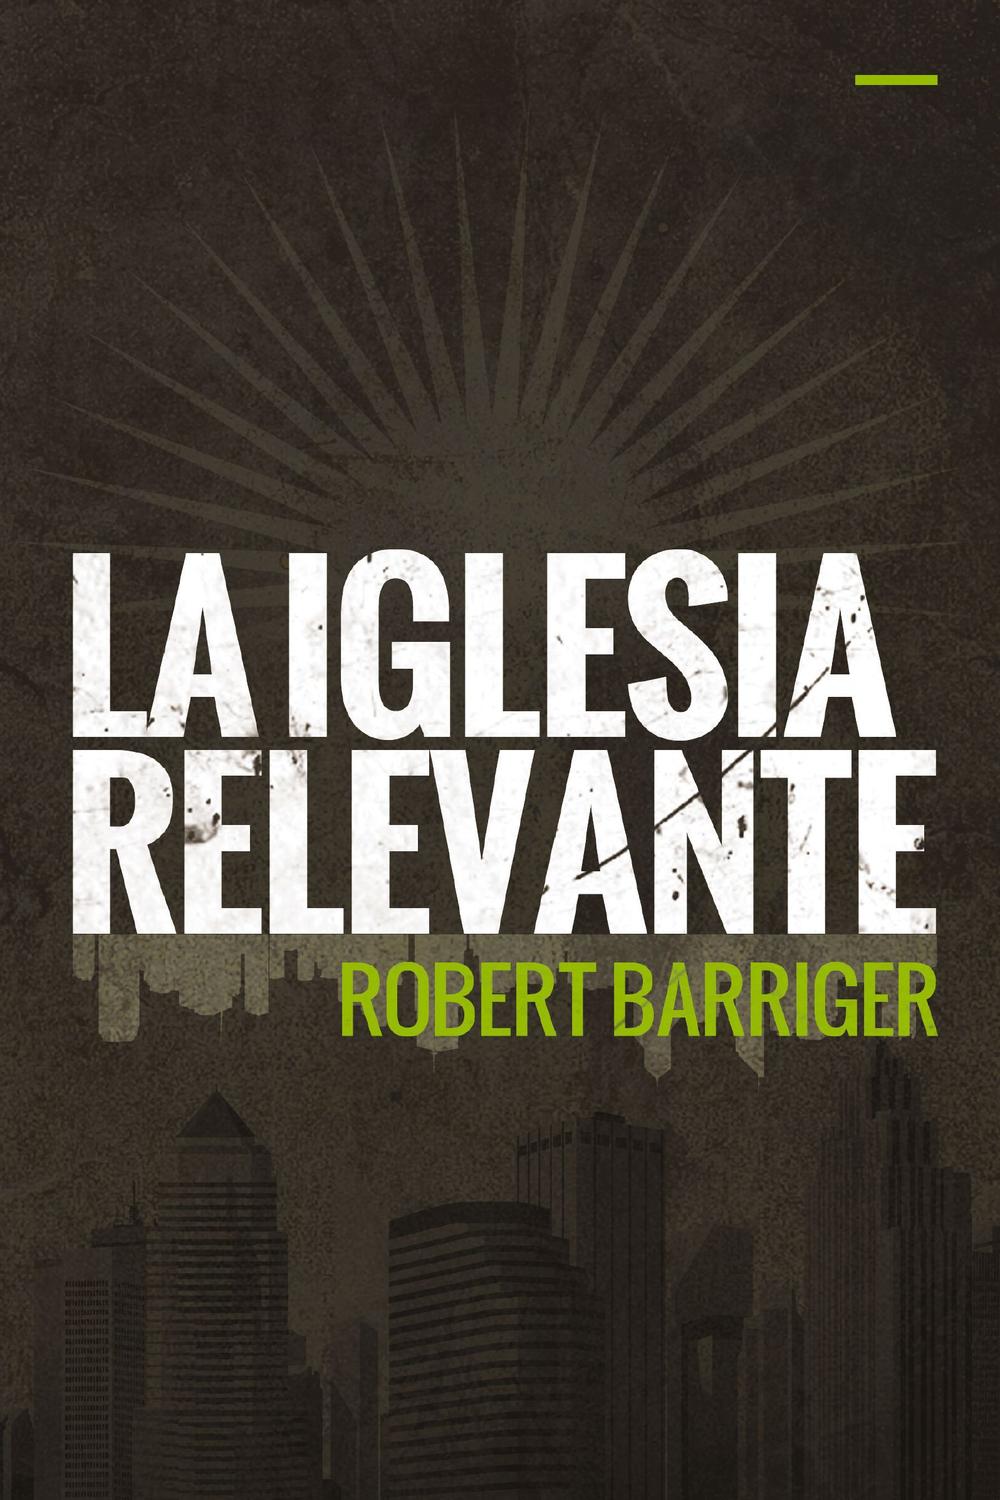 PDF] La iglesia relevante by Robert Barriger eBook | Perlego